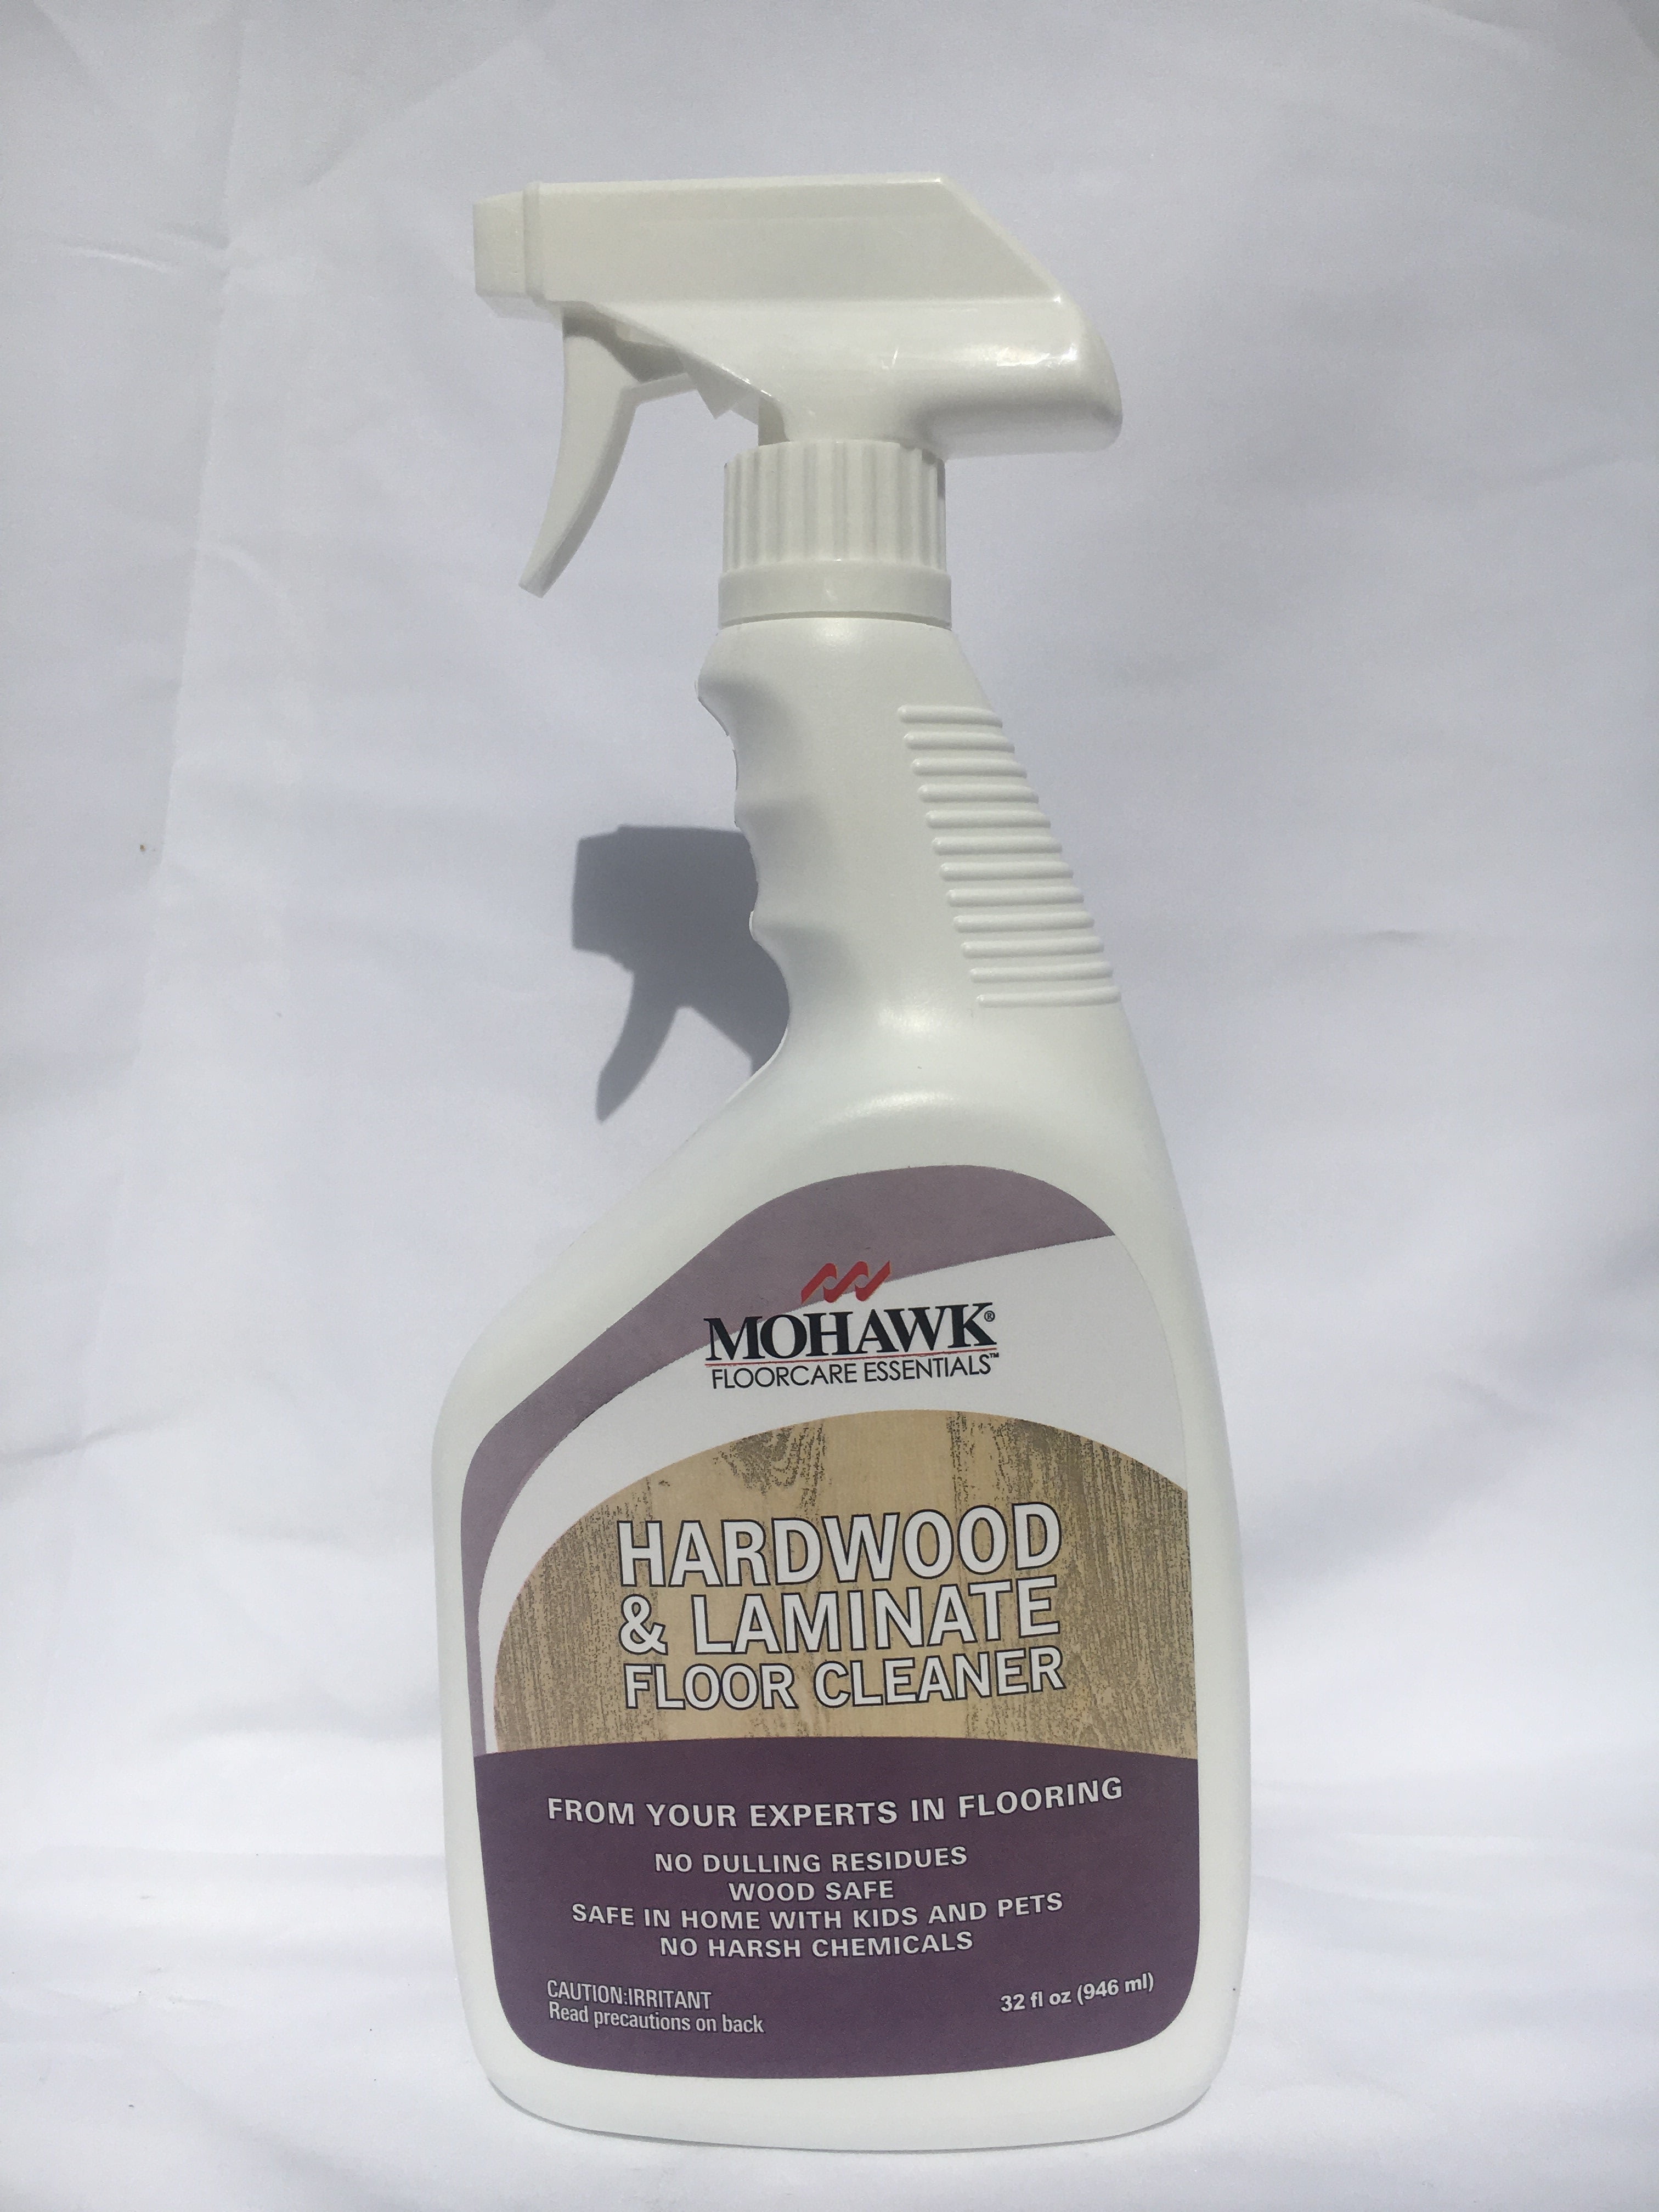 New Mohawk Hardwood And Laminate Floor Cleaner Spray Bottle 32 Fl Oz Walmart Com Walmart Com,How To Make Cabbage Seeds